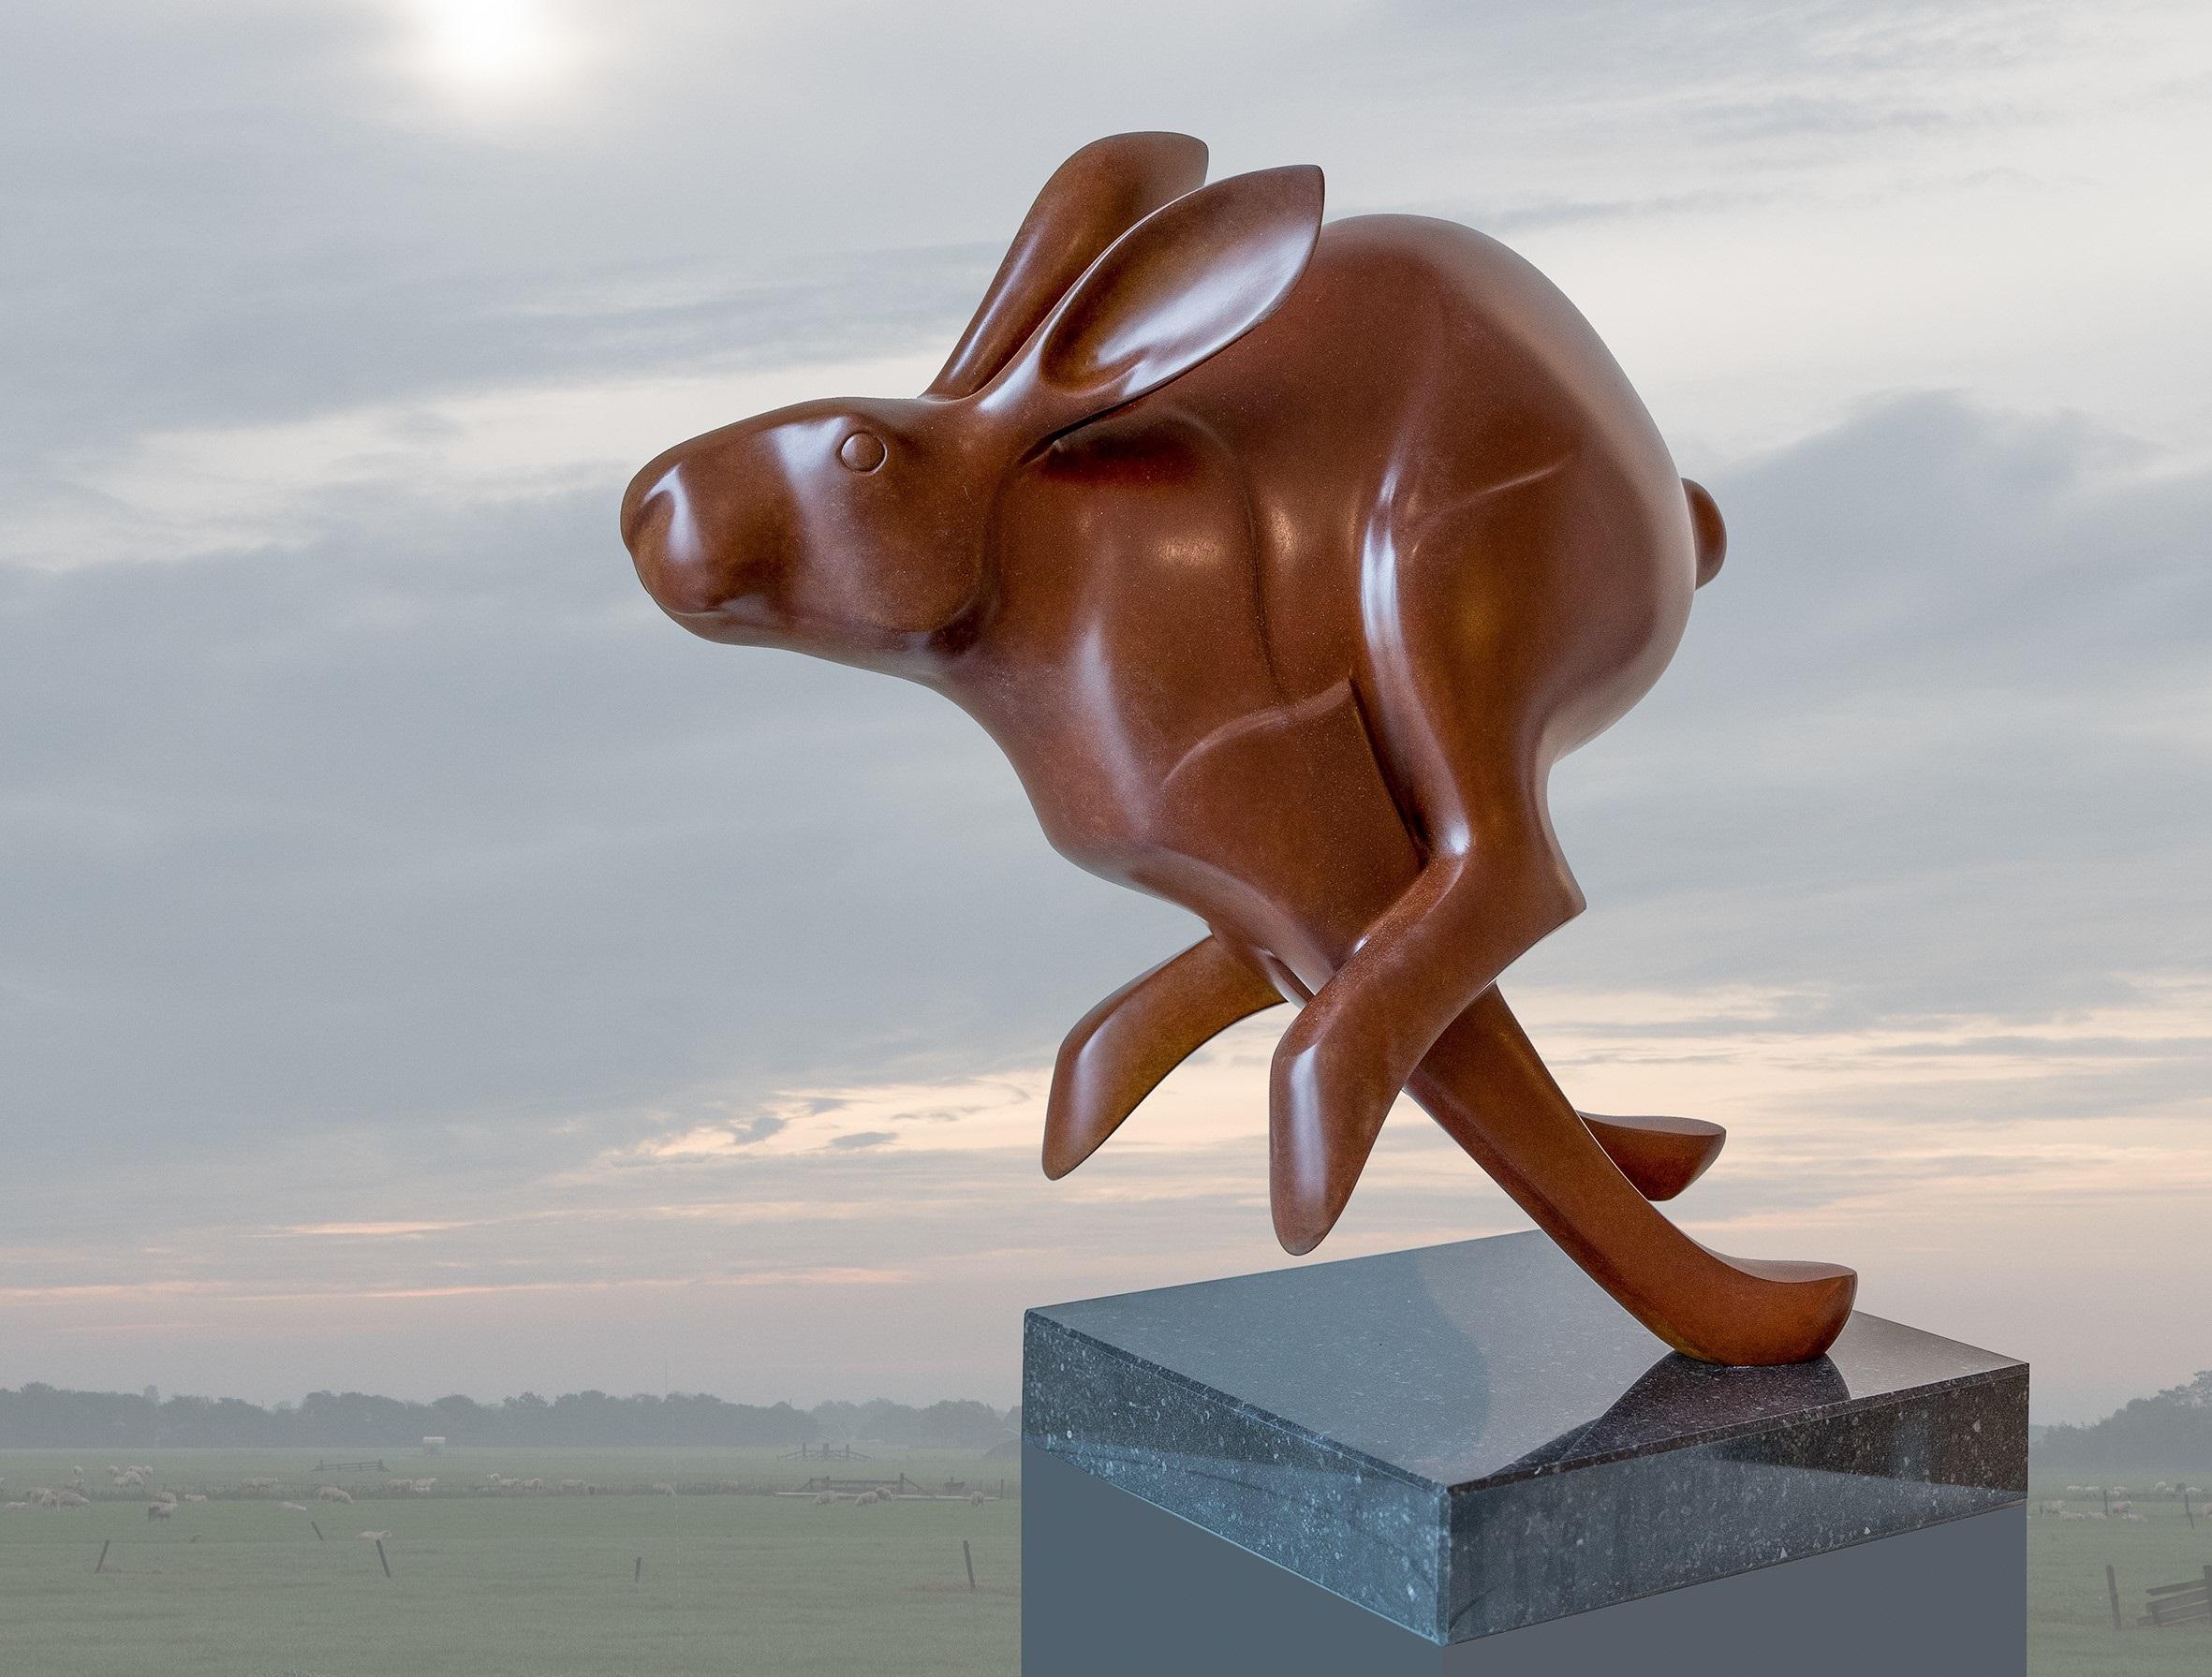 Evert den Hartog Figurative Sculpture - Rennende Haas no. 3 Running Hare Bronze Sculpture Animal Contemporary In Stock